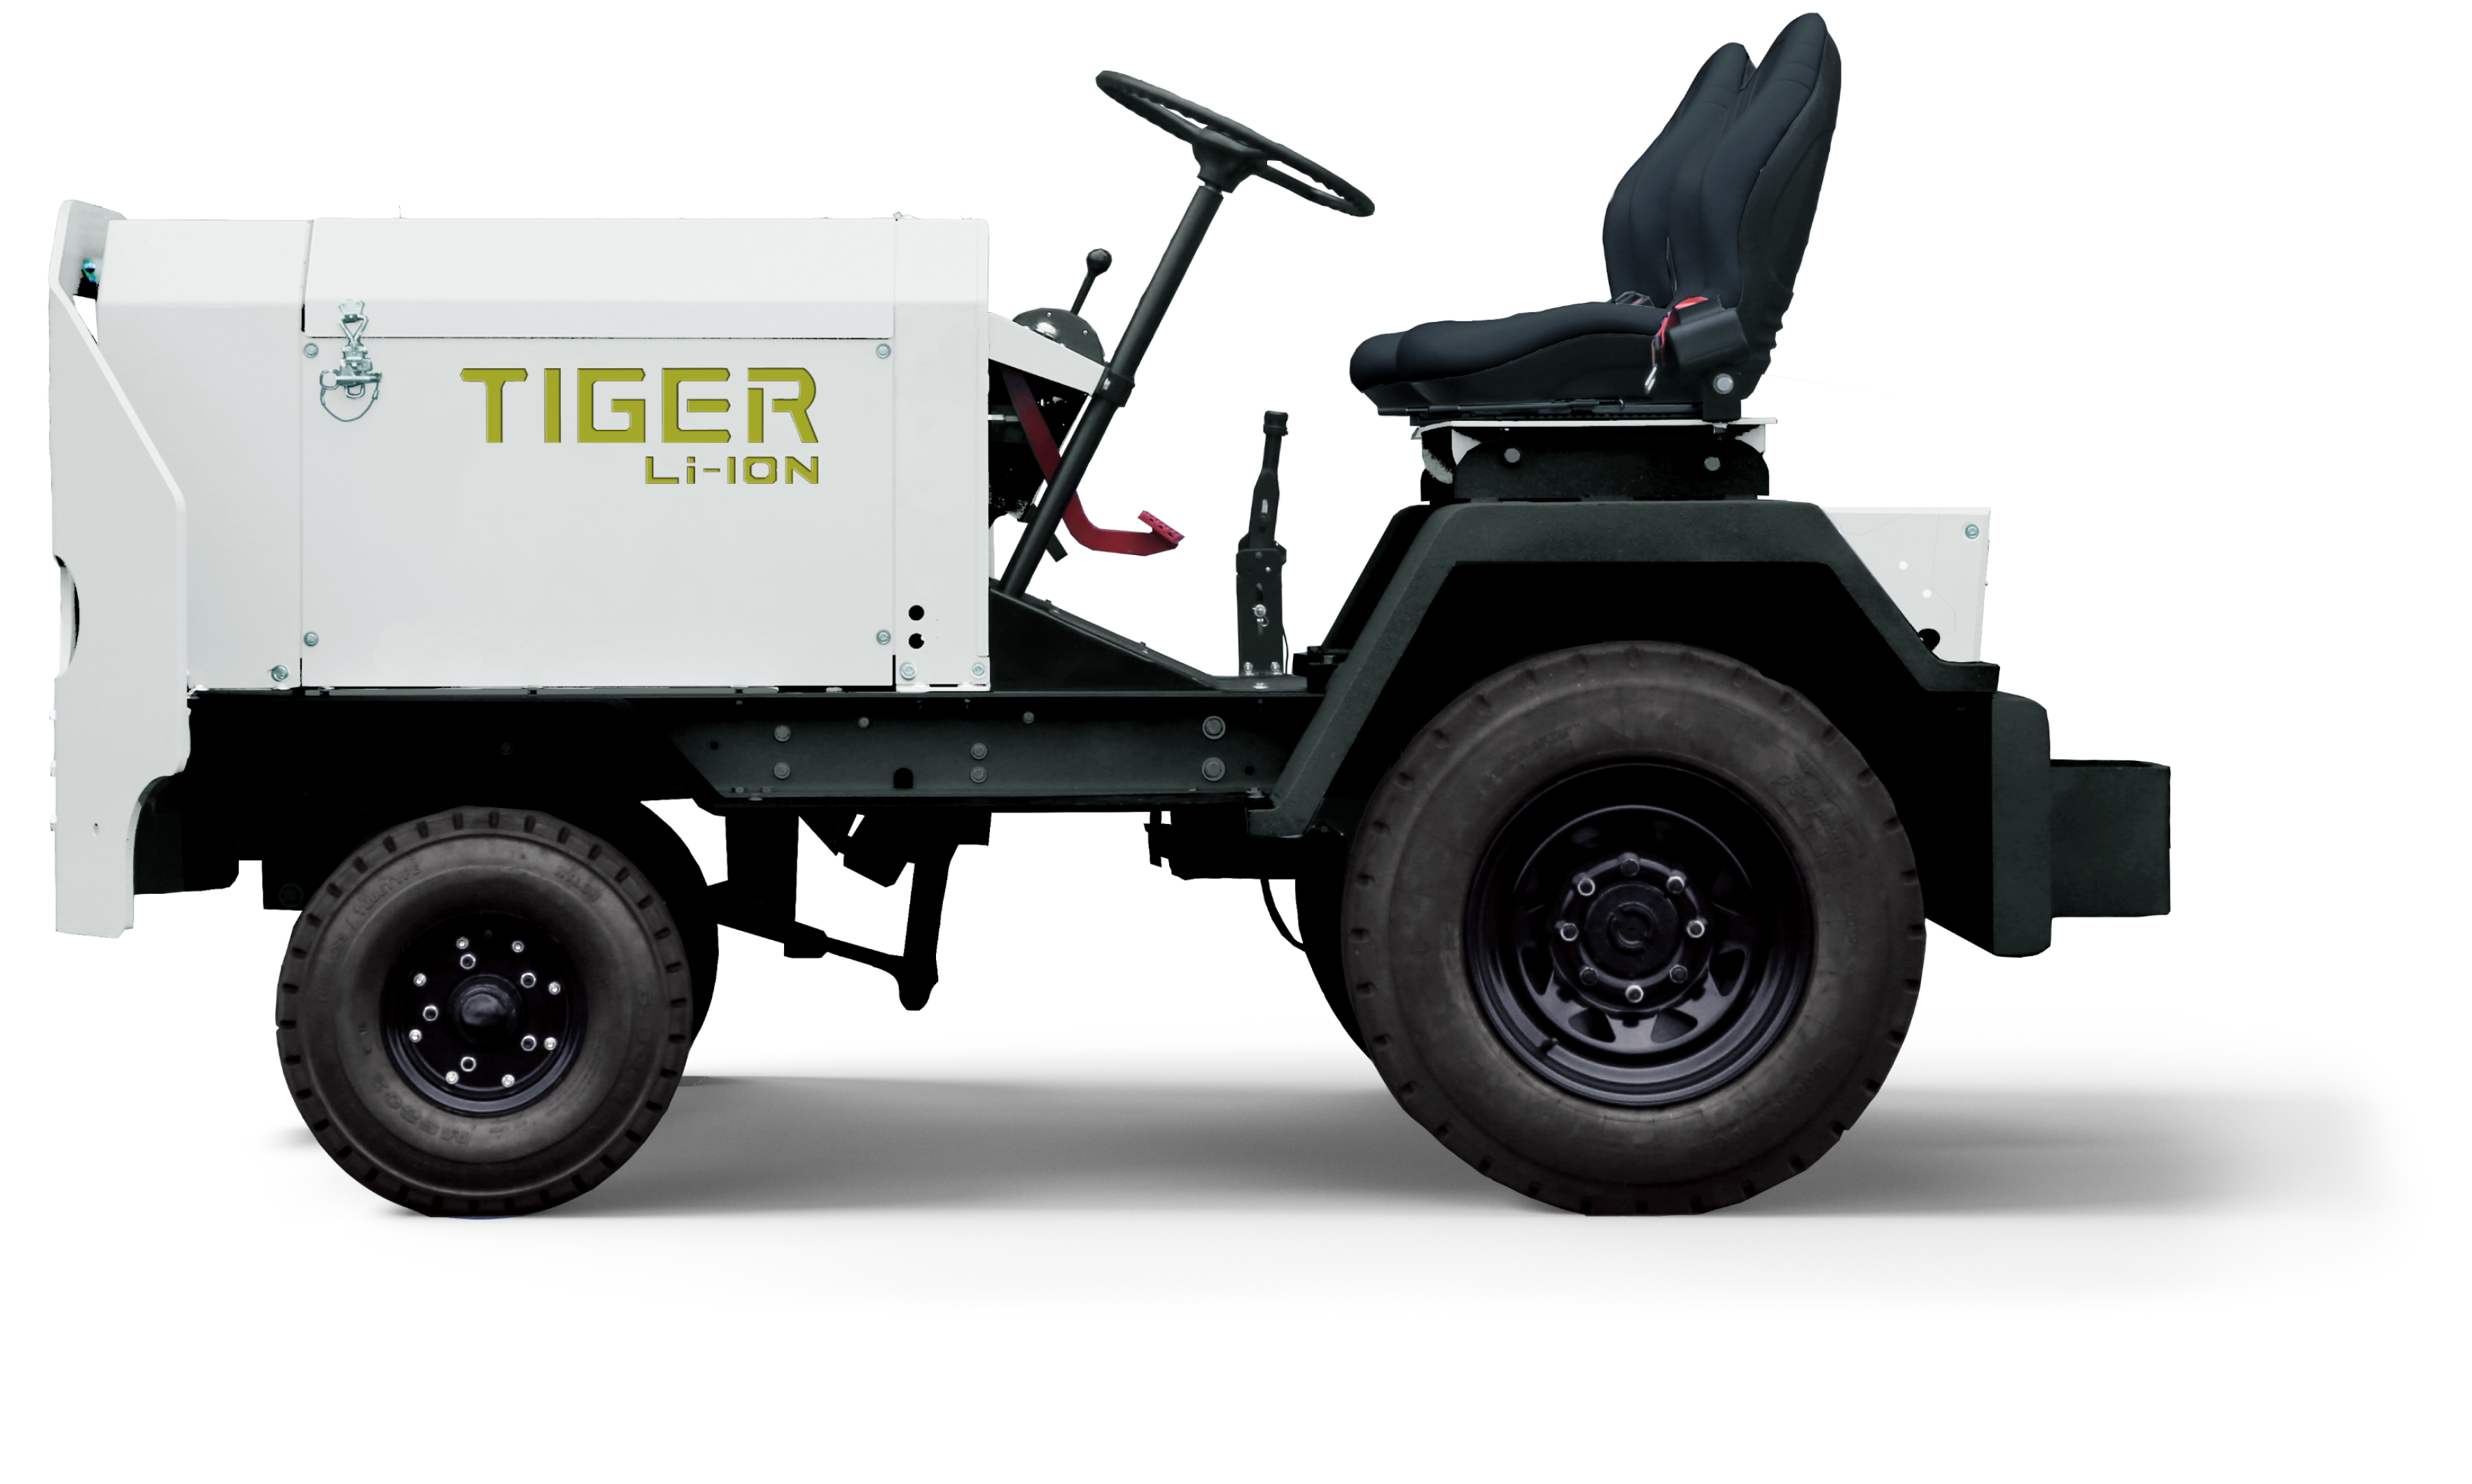 NFH-G450 - Tiger-Corporation